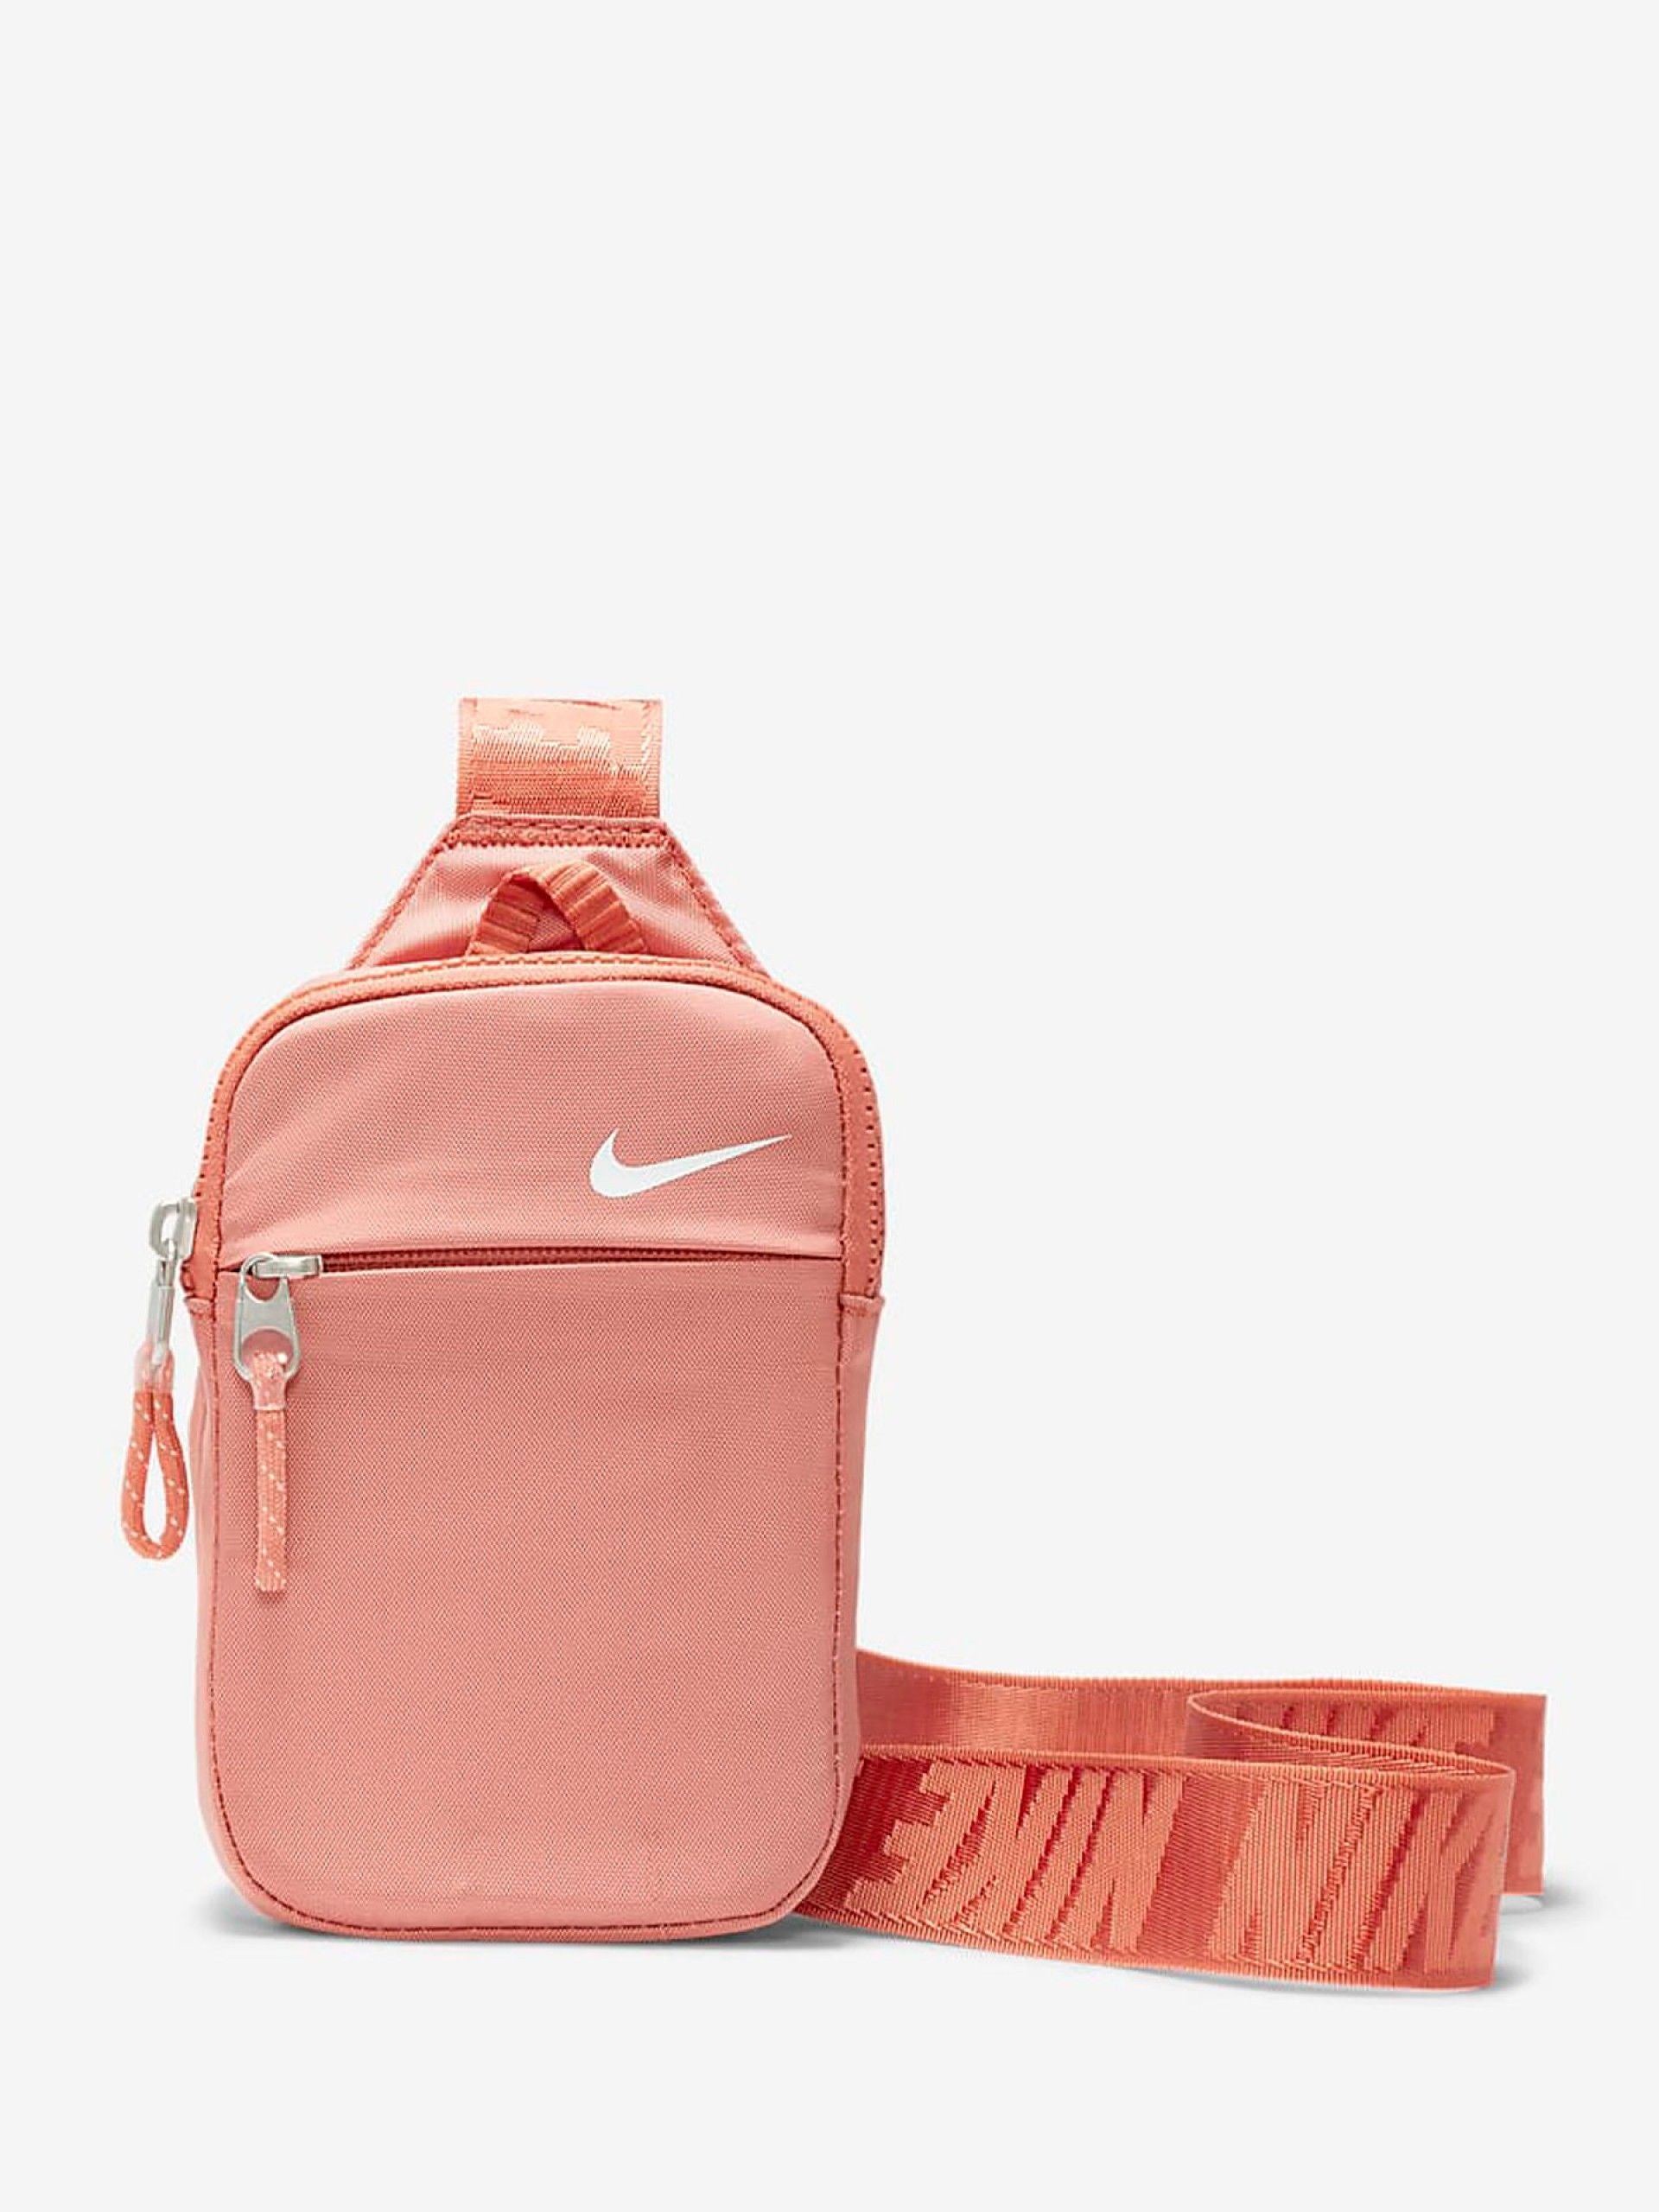 Nike Messenger Bag - Pink